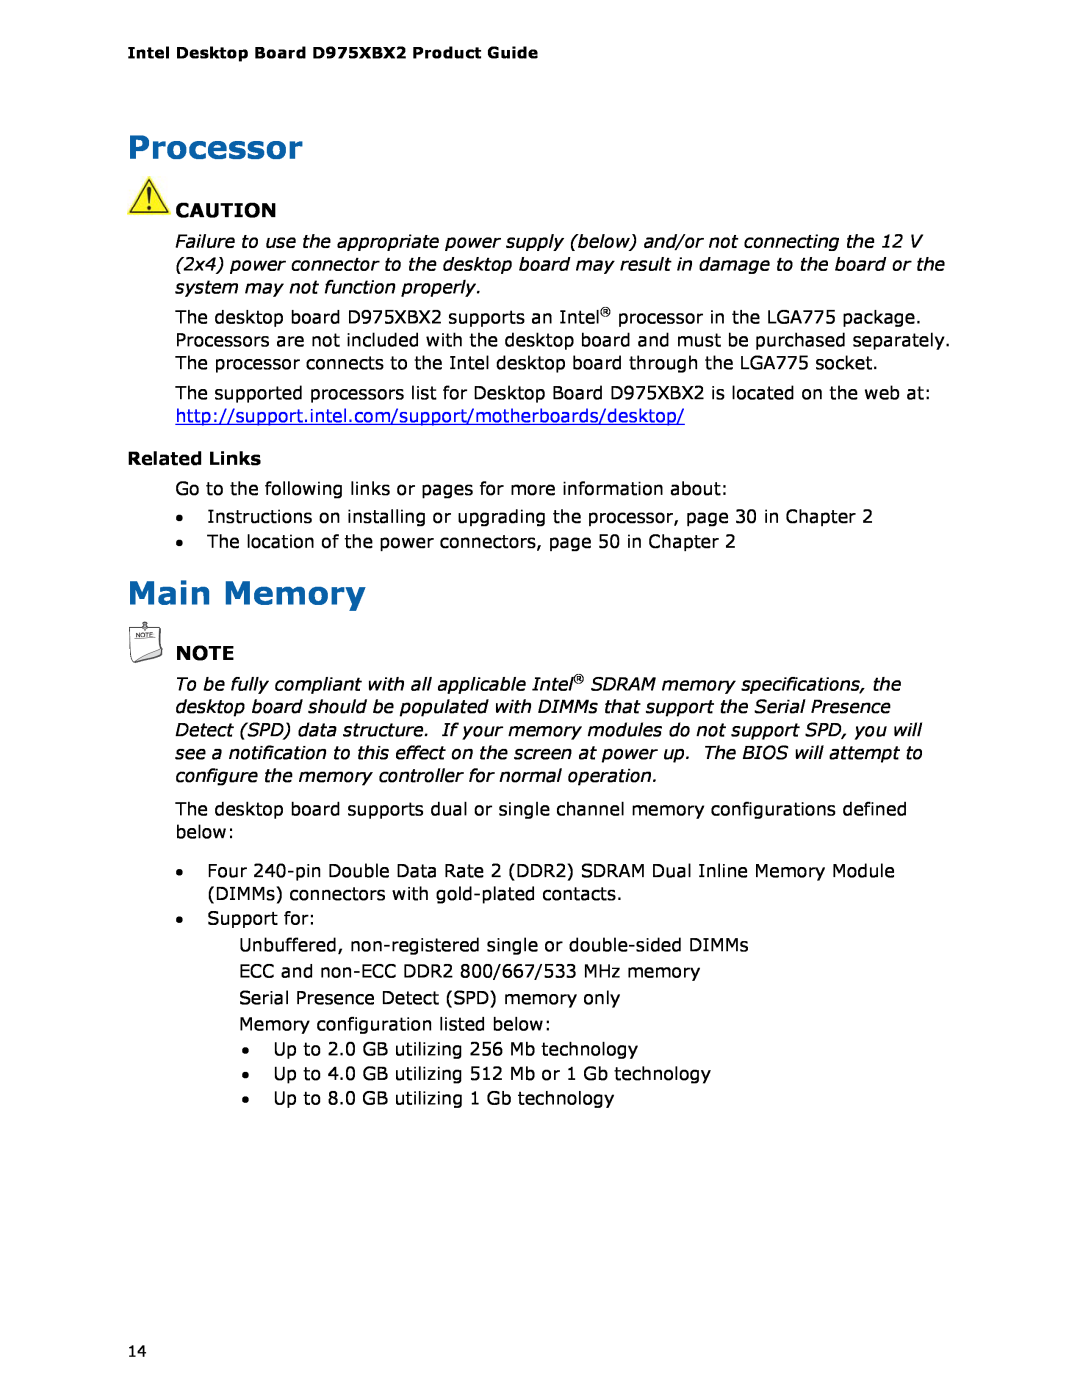 Intel D975XBX2 manual Processor, Main Memory 